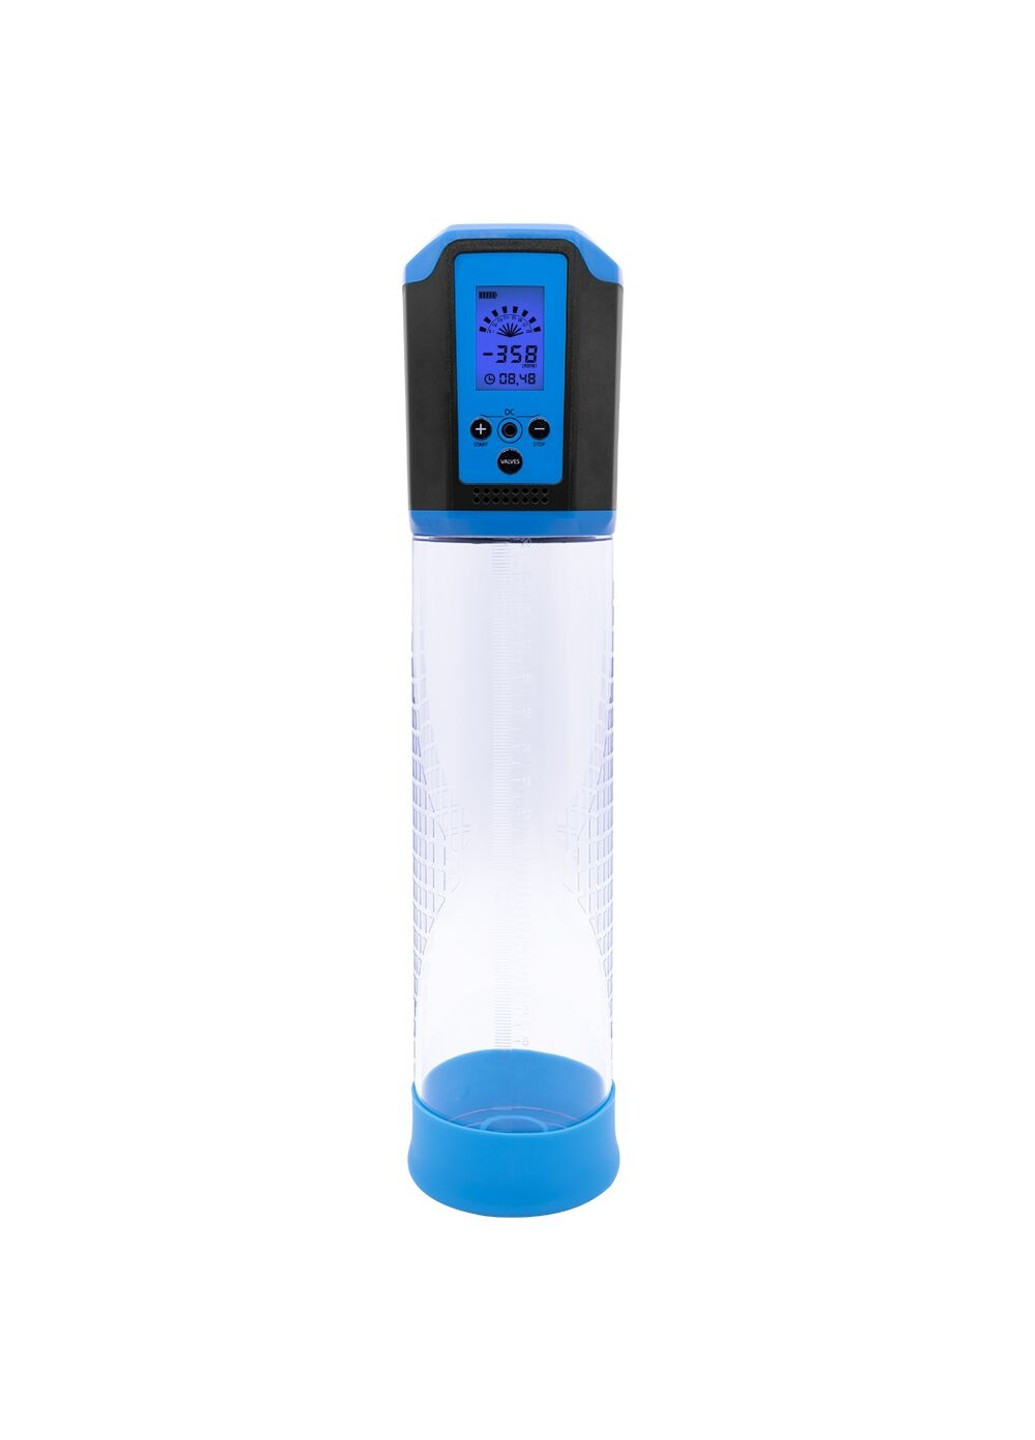 Автоматична вакуумна помпа Men Passion Pump Blue, LED-табло, перезаряджувана, 8 режимів PowerUp (254785271)